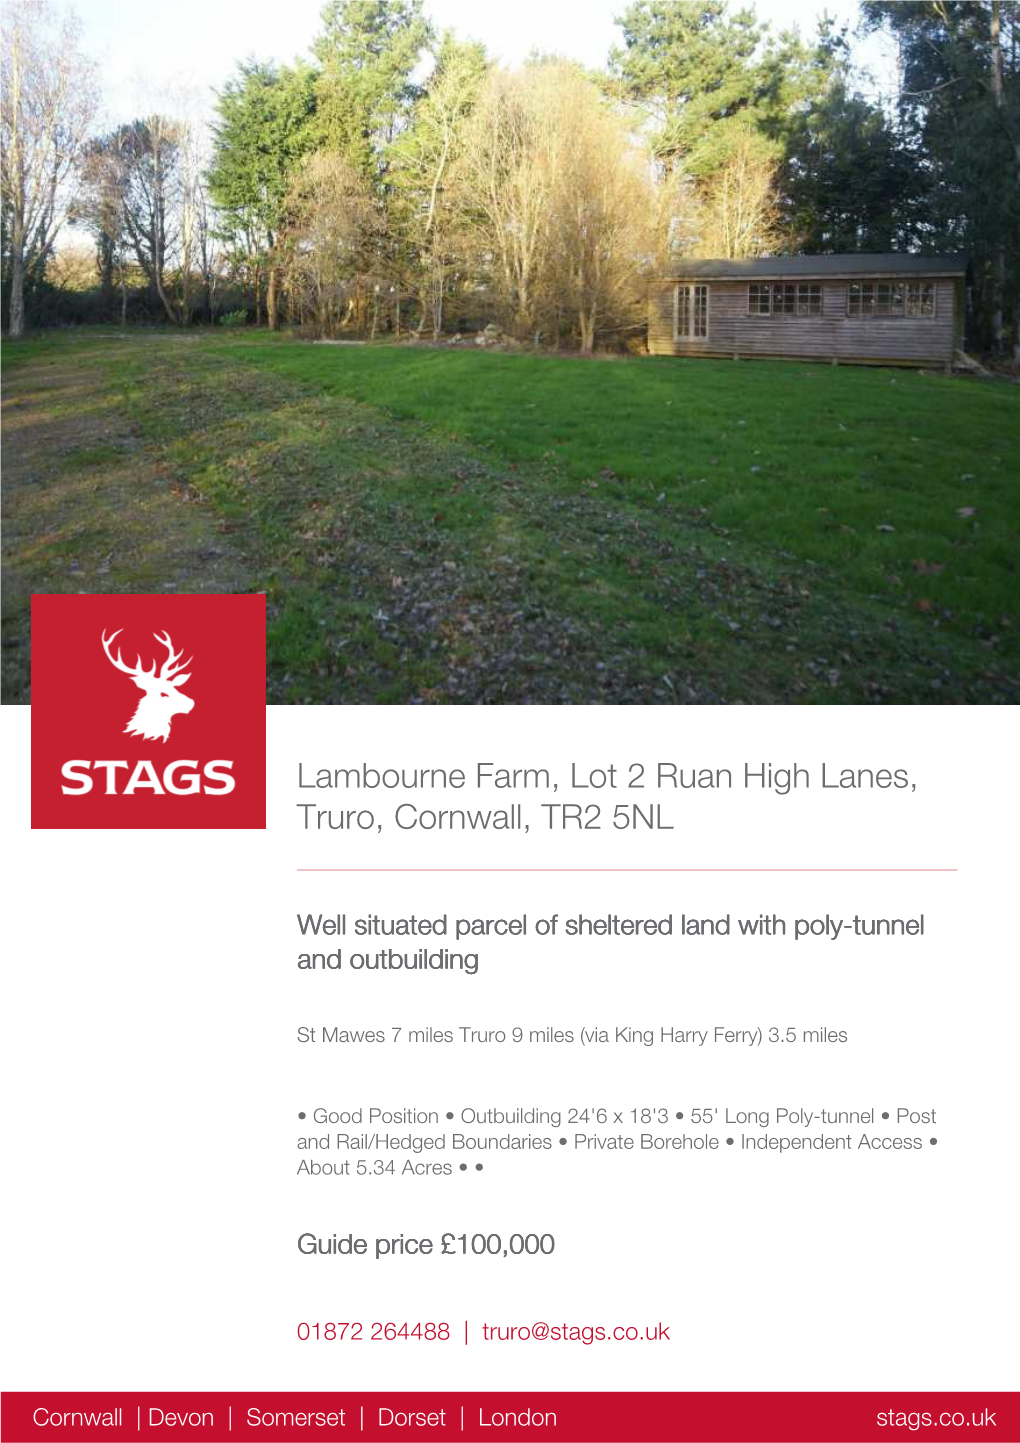 Lambourne Farm, Lot 2 Ruan High Lanes, Truro, Cornwall, TR2 5NL